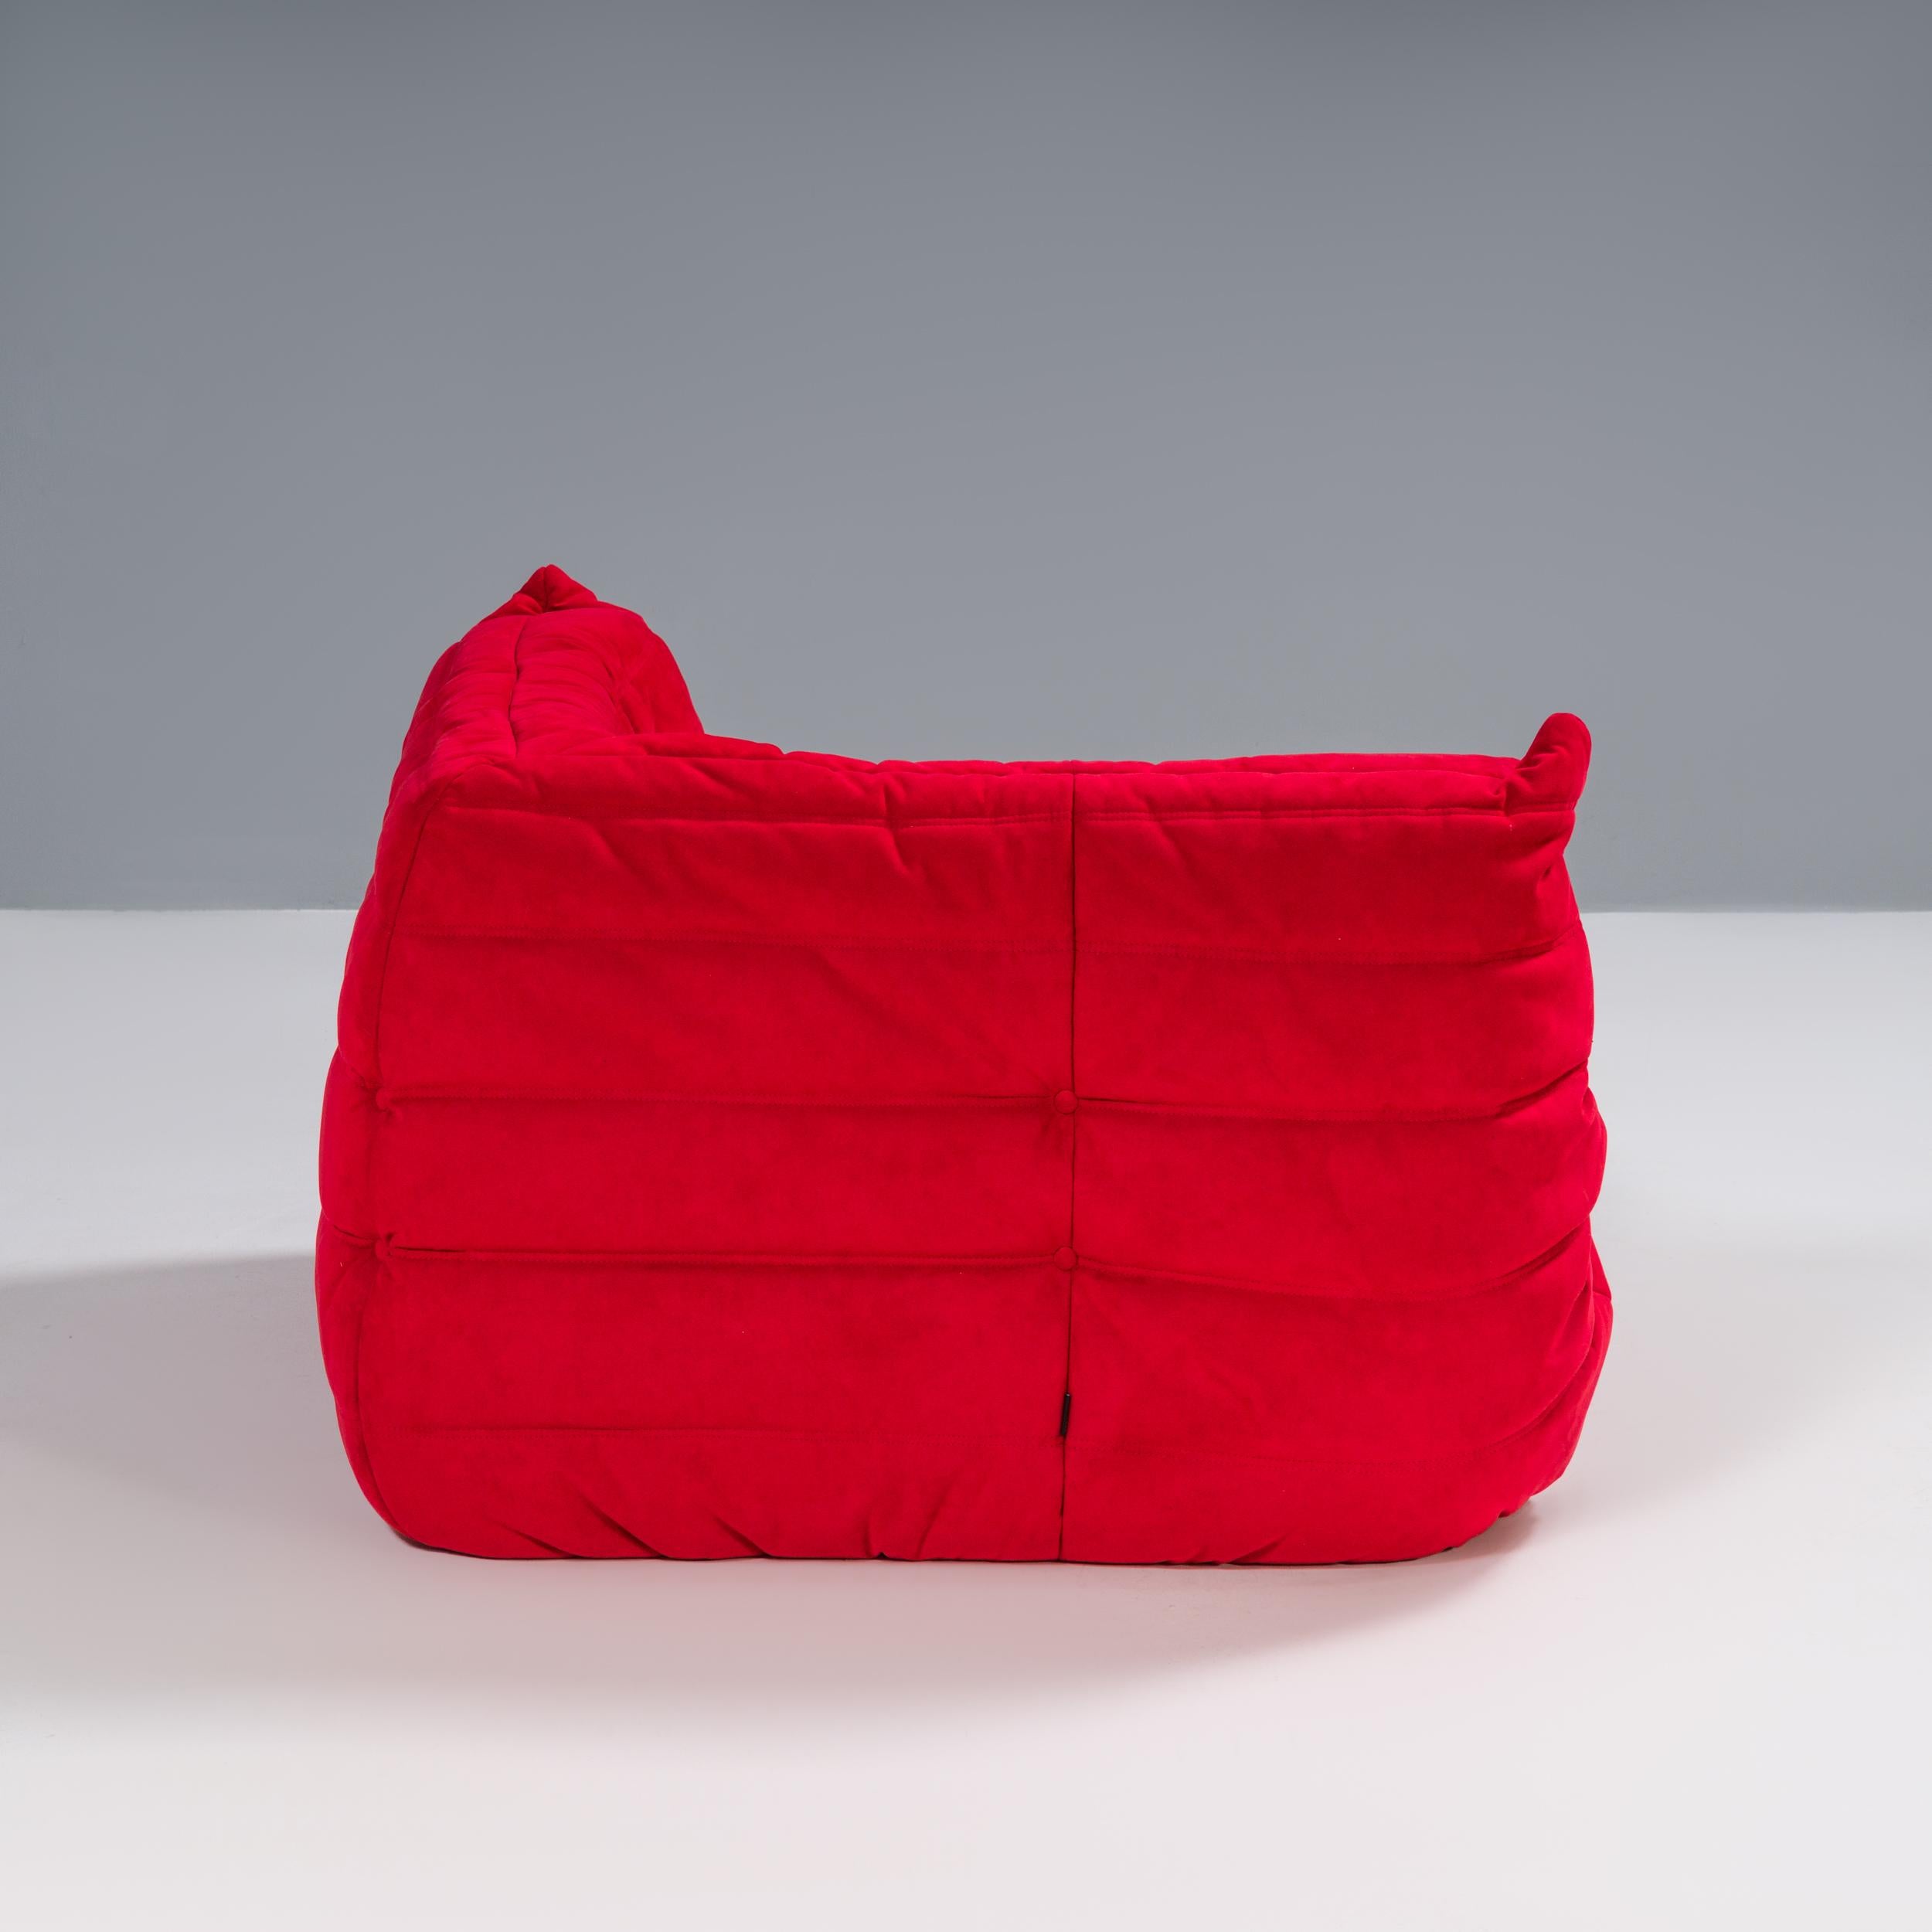 Ligne Roset by Michel Ducaroy Togo Red Modular Sofa, Set of 3 2